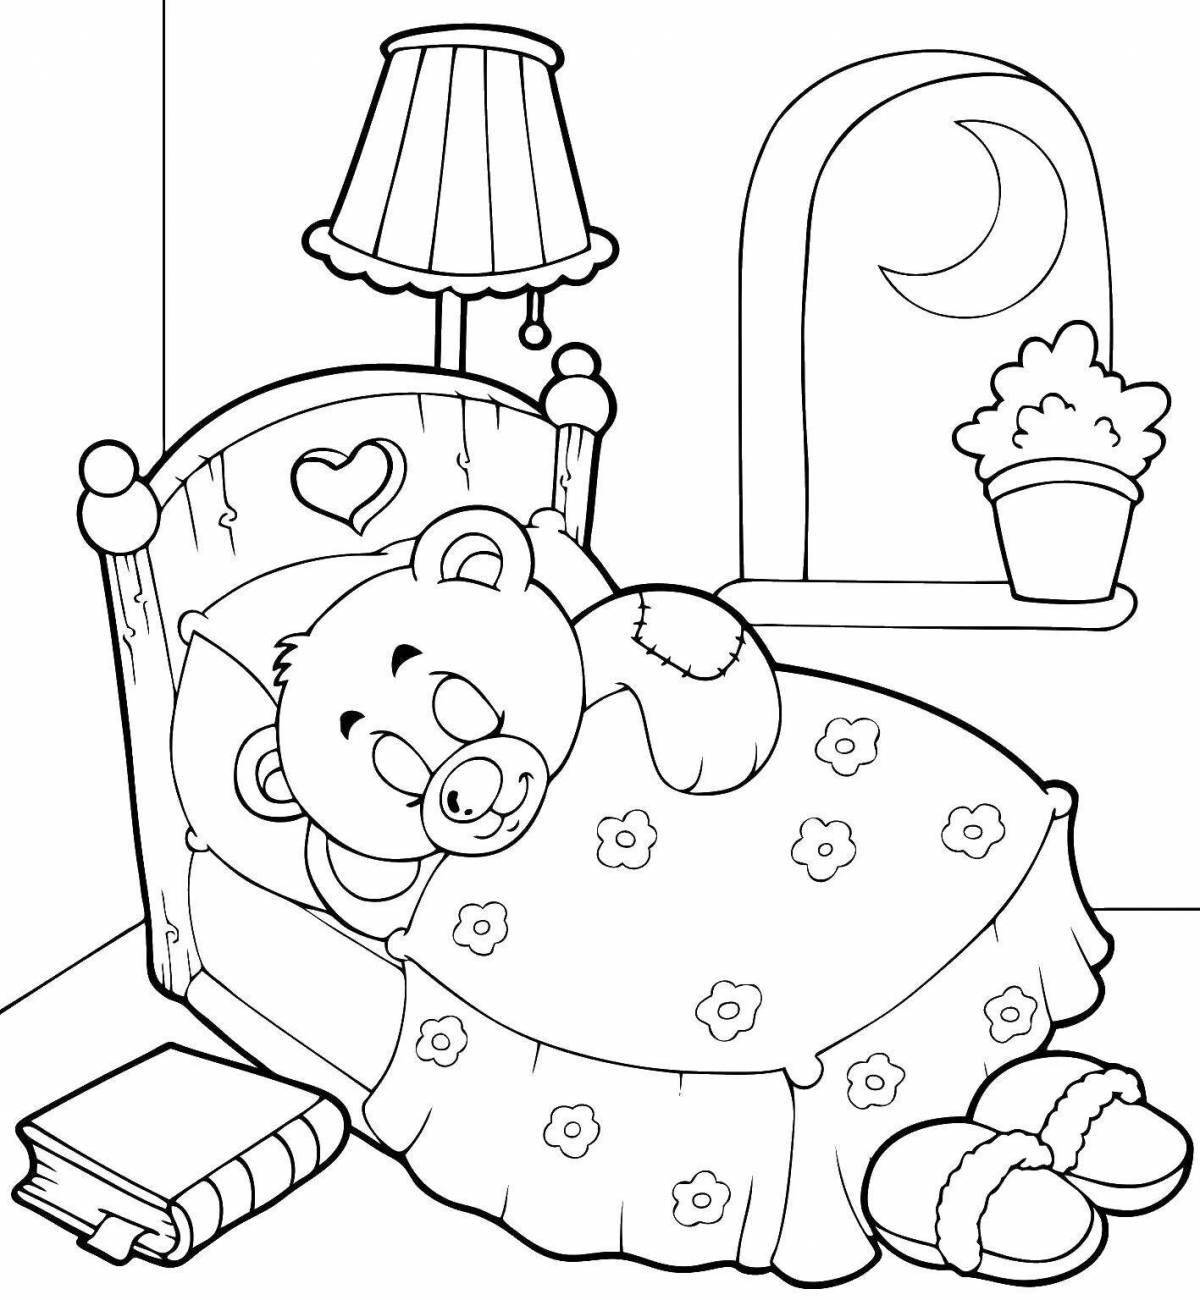 Coloring book joyful teddy bear sleeping